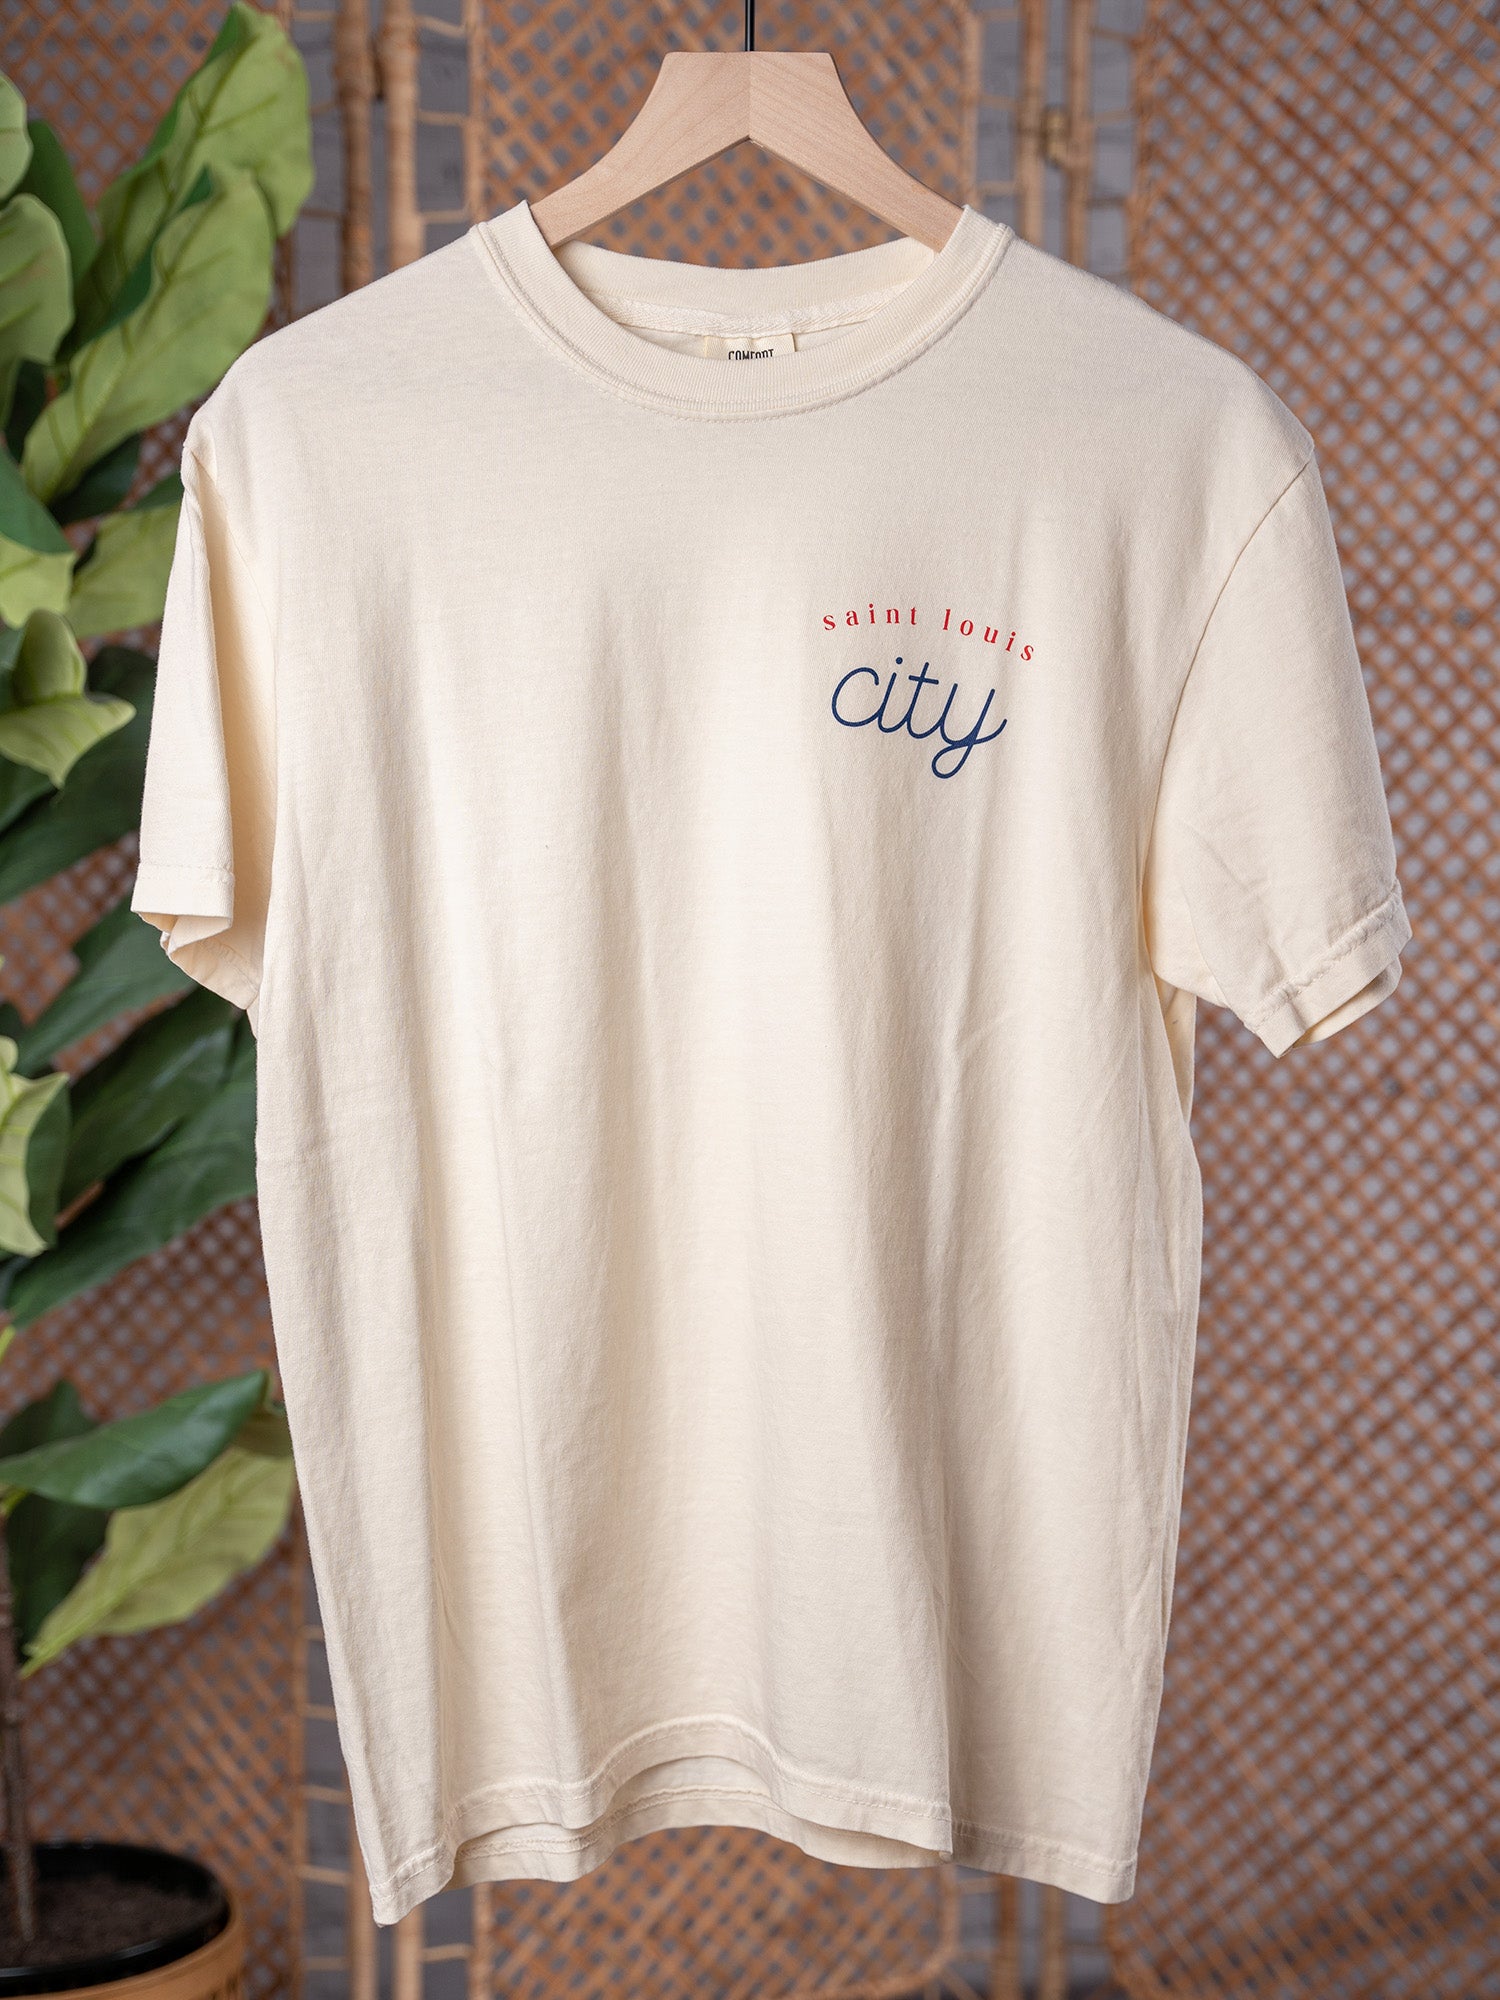 St. Louis City Screen Printed T-Shirt Large / Unisex - Full Length